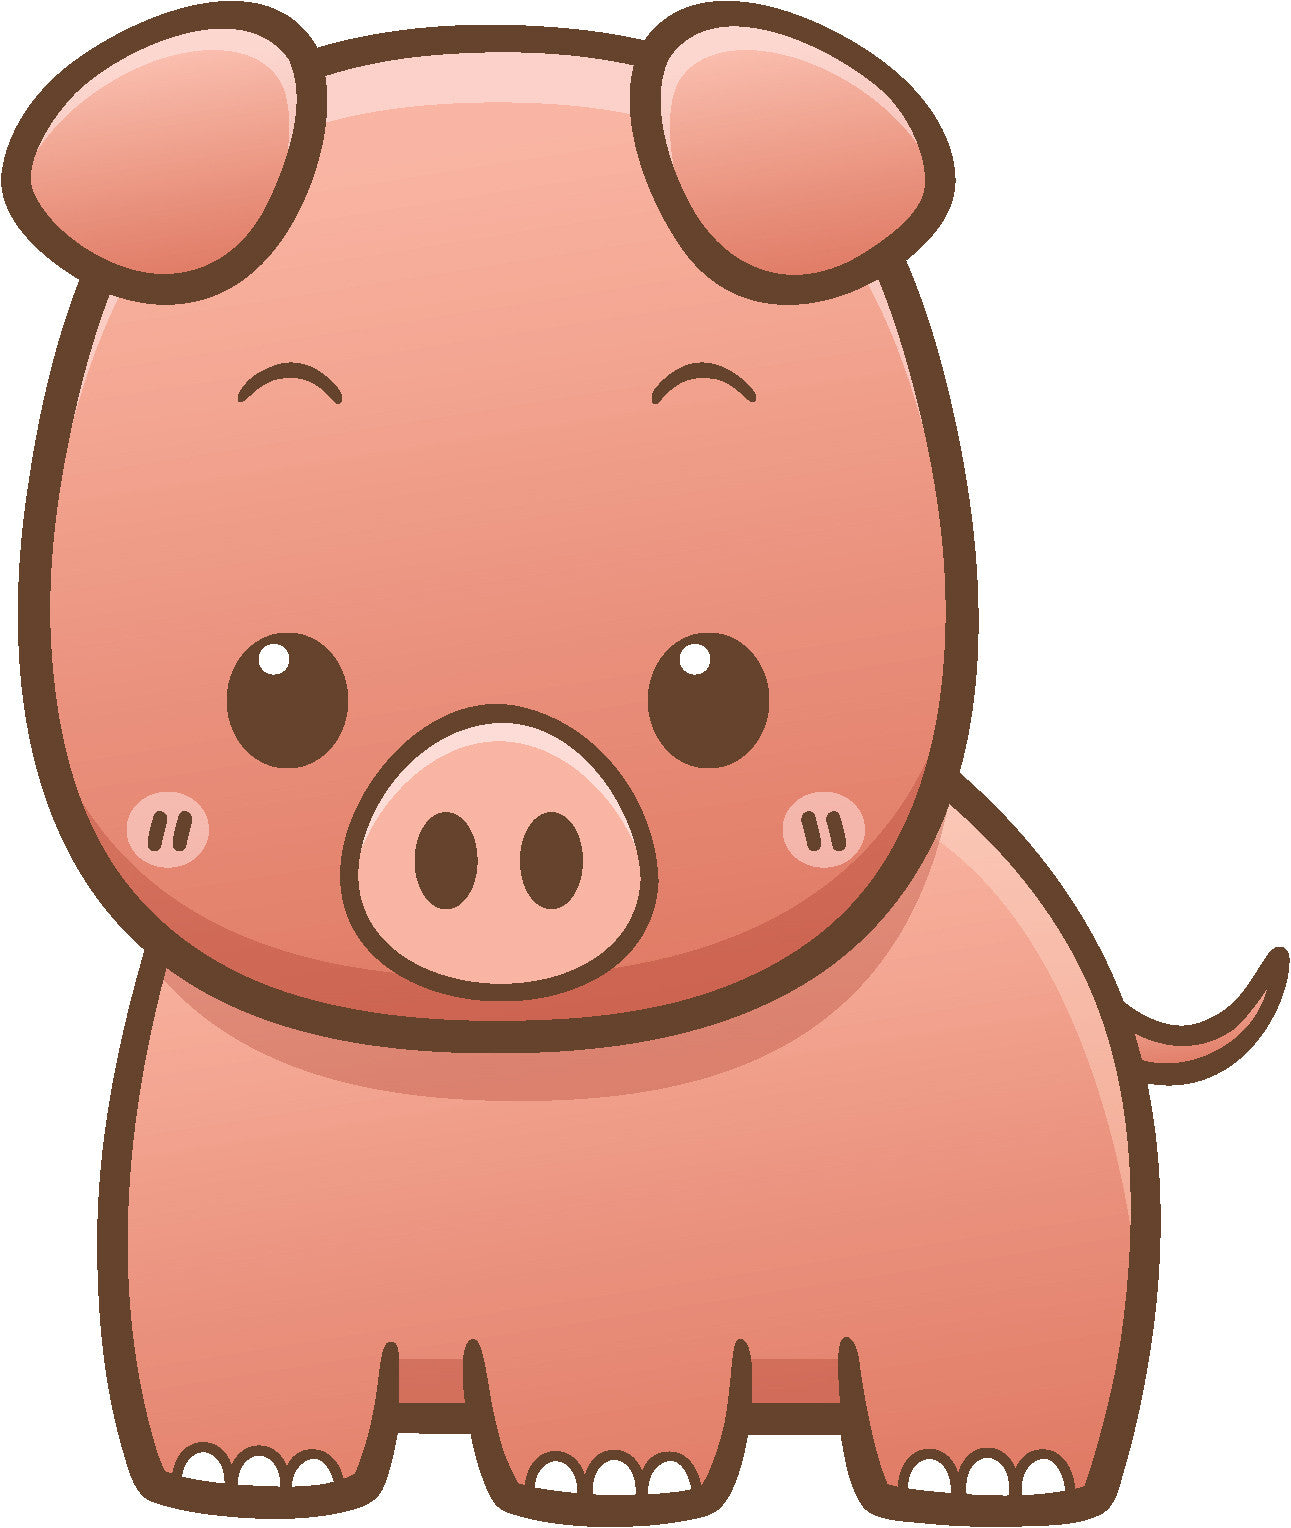 Cute Simple Kawaii Farm Animal Cartoon Icon - Pig Vinyl Decal Sticker